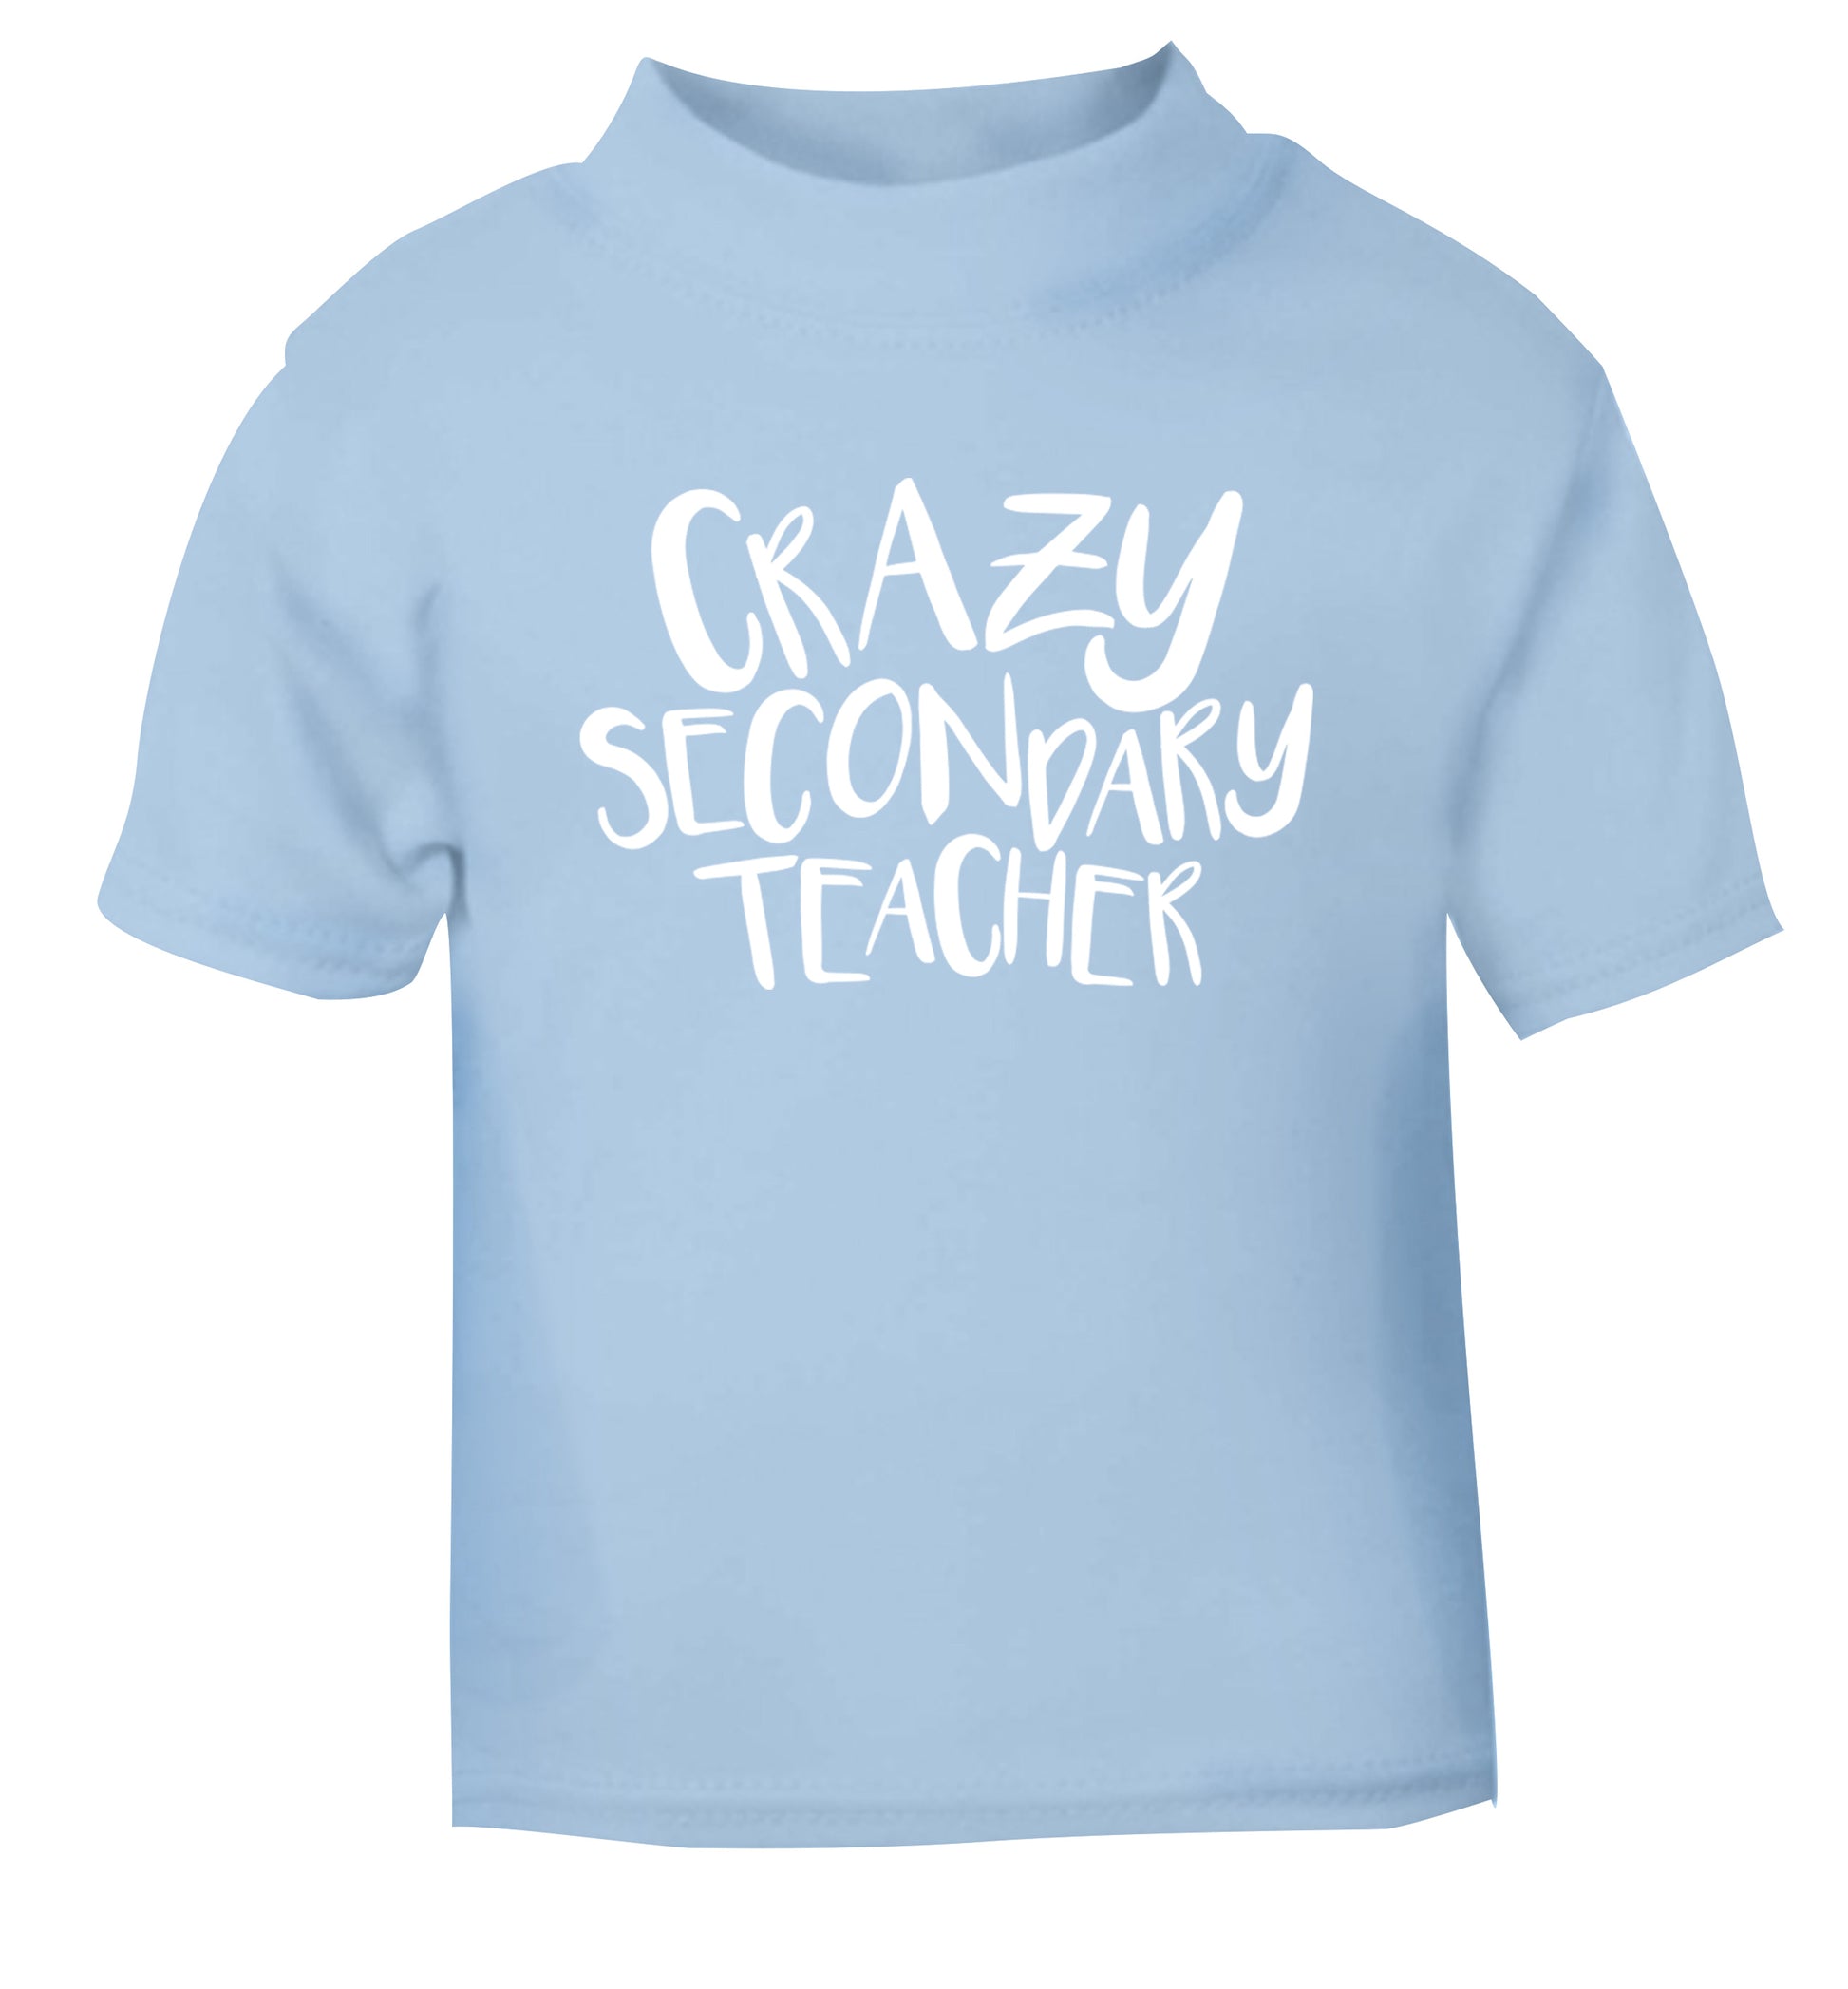 Crazy secondary teacher light blue Baby Toddler Tshirt 2 Years